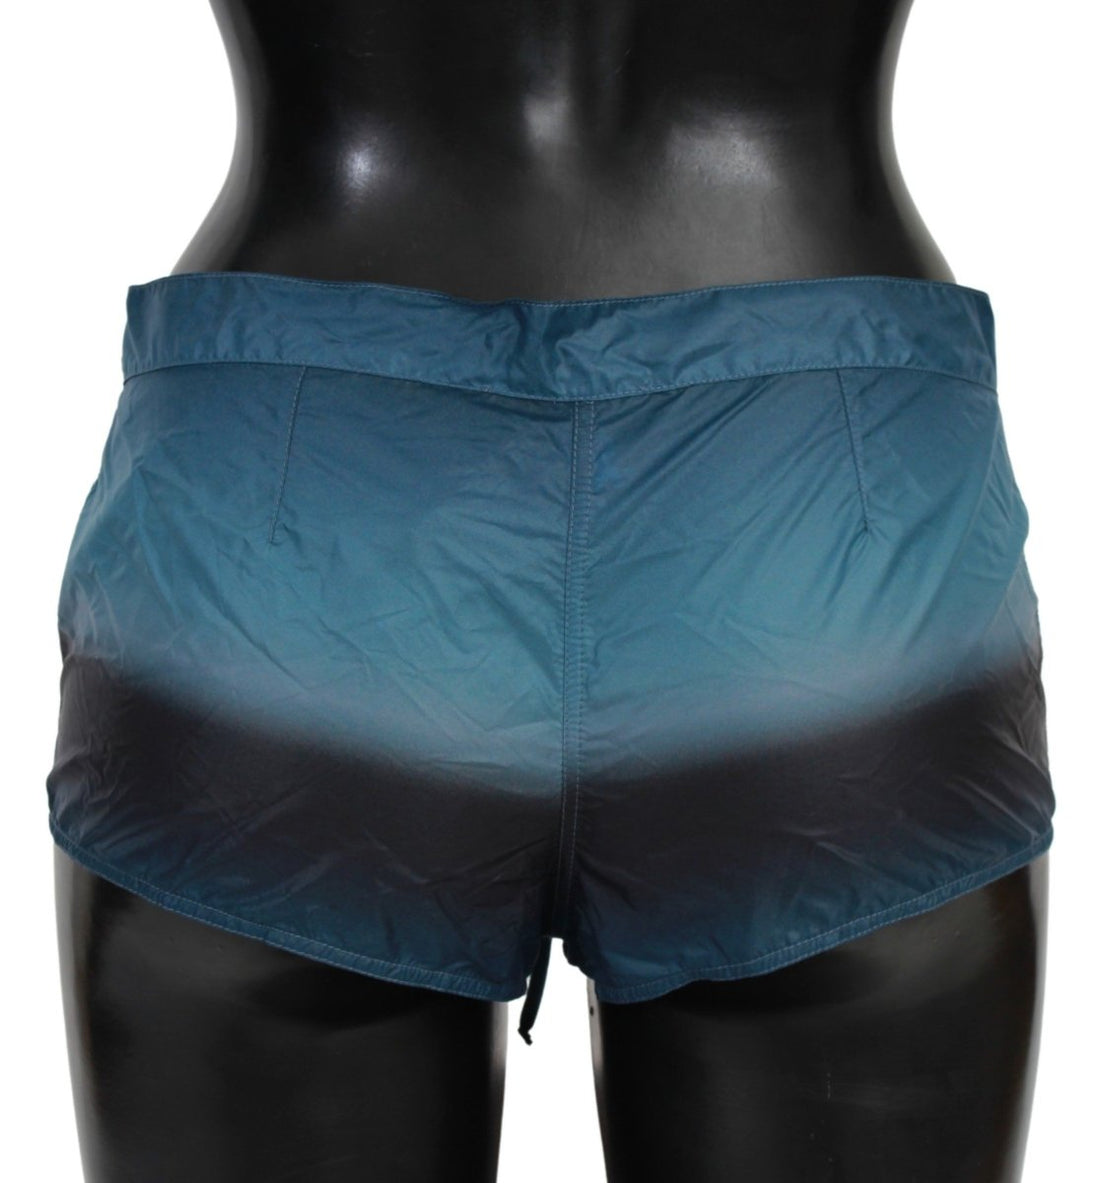 Ermanno Scervino Blue Ombre Shorts Beachwear Bikini Swimsuit - TINT - Ermanno Scervino - BIK814-IT2